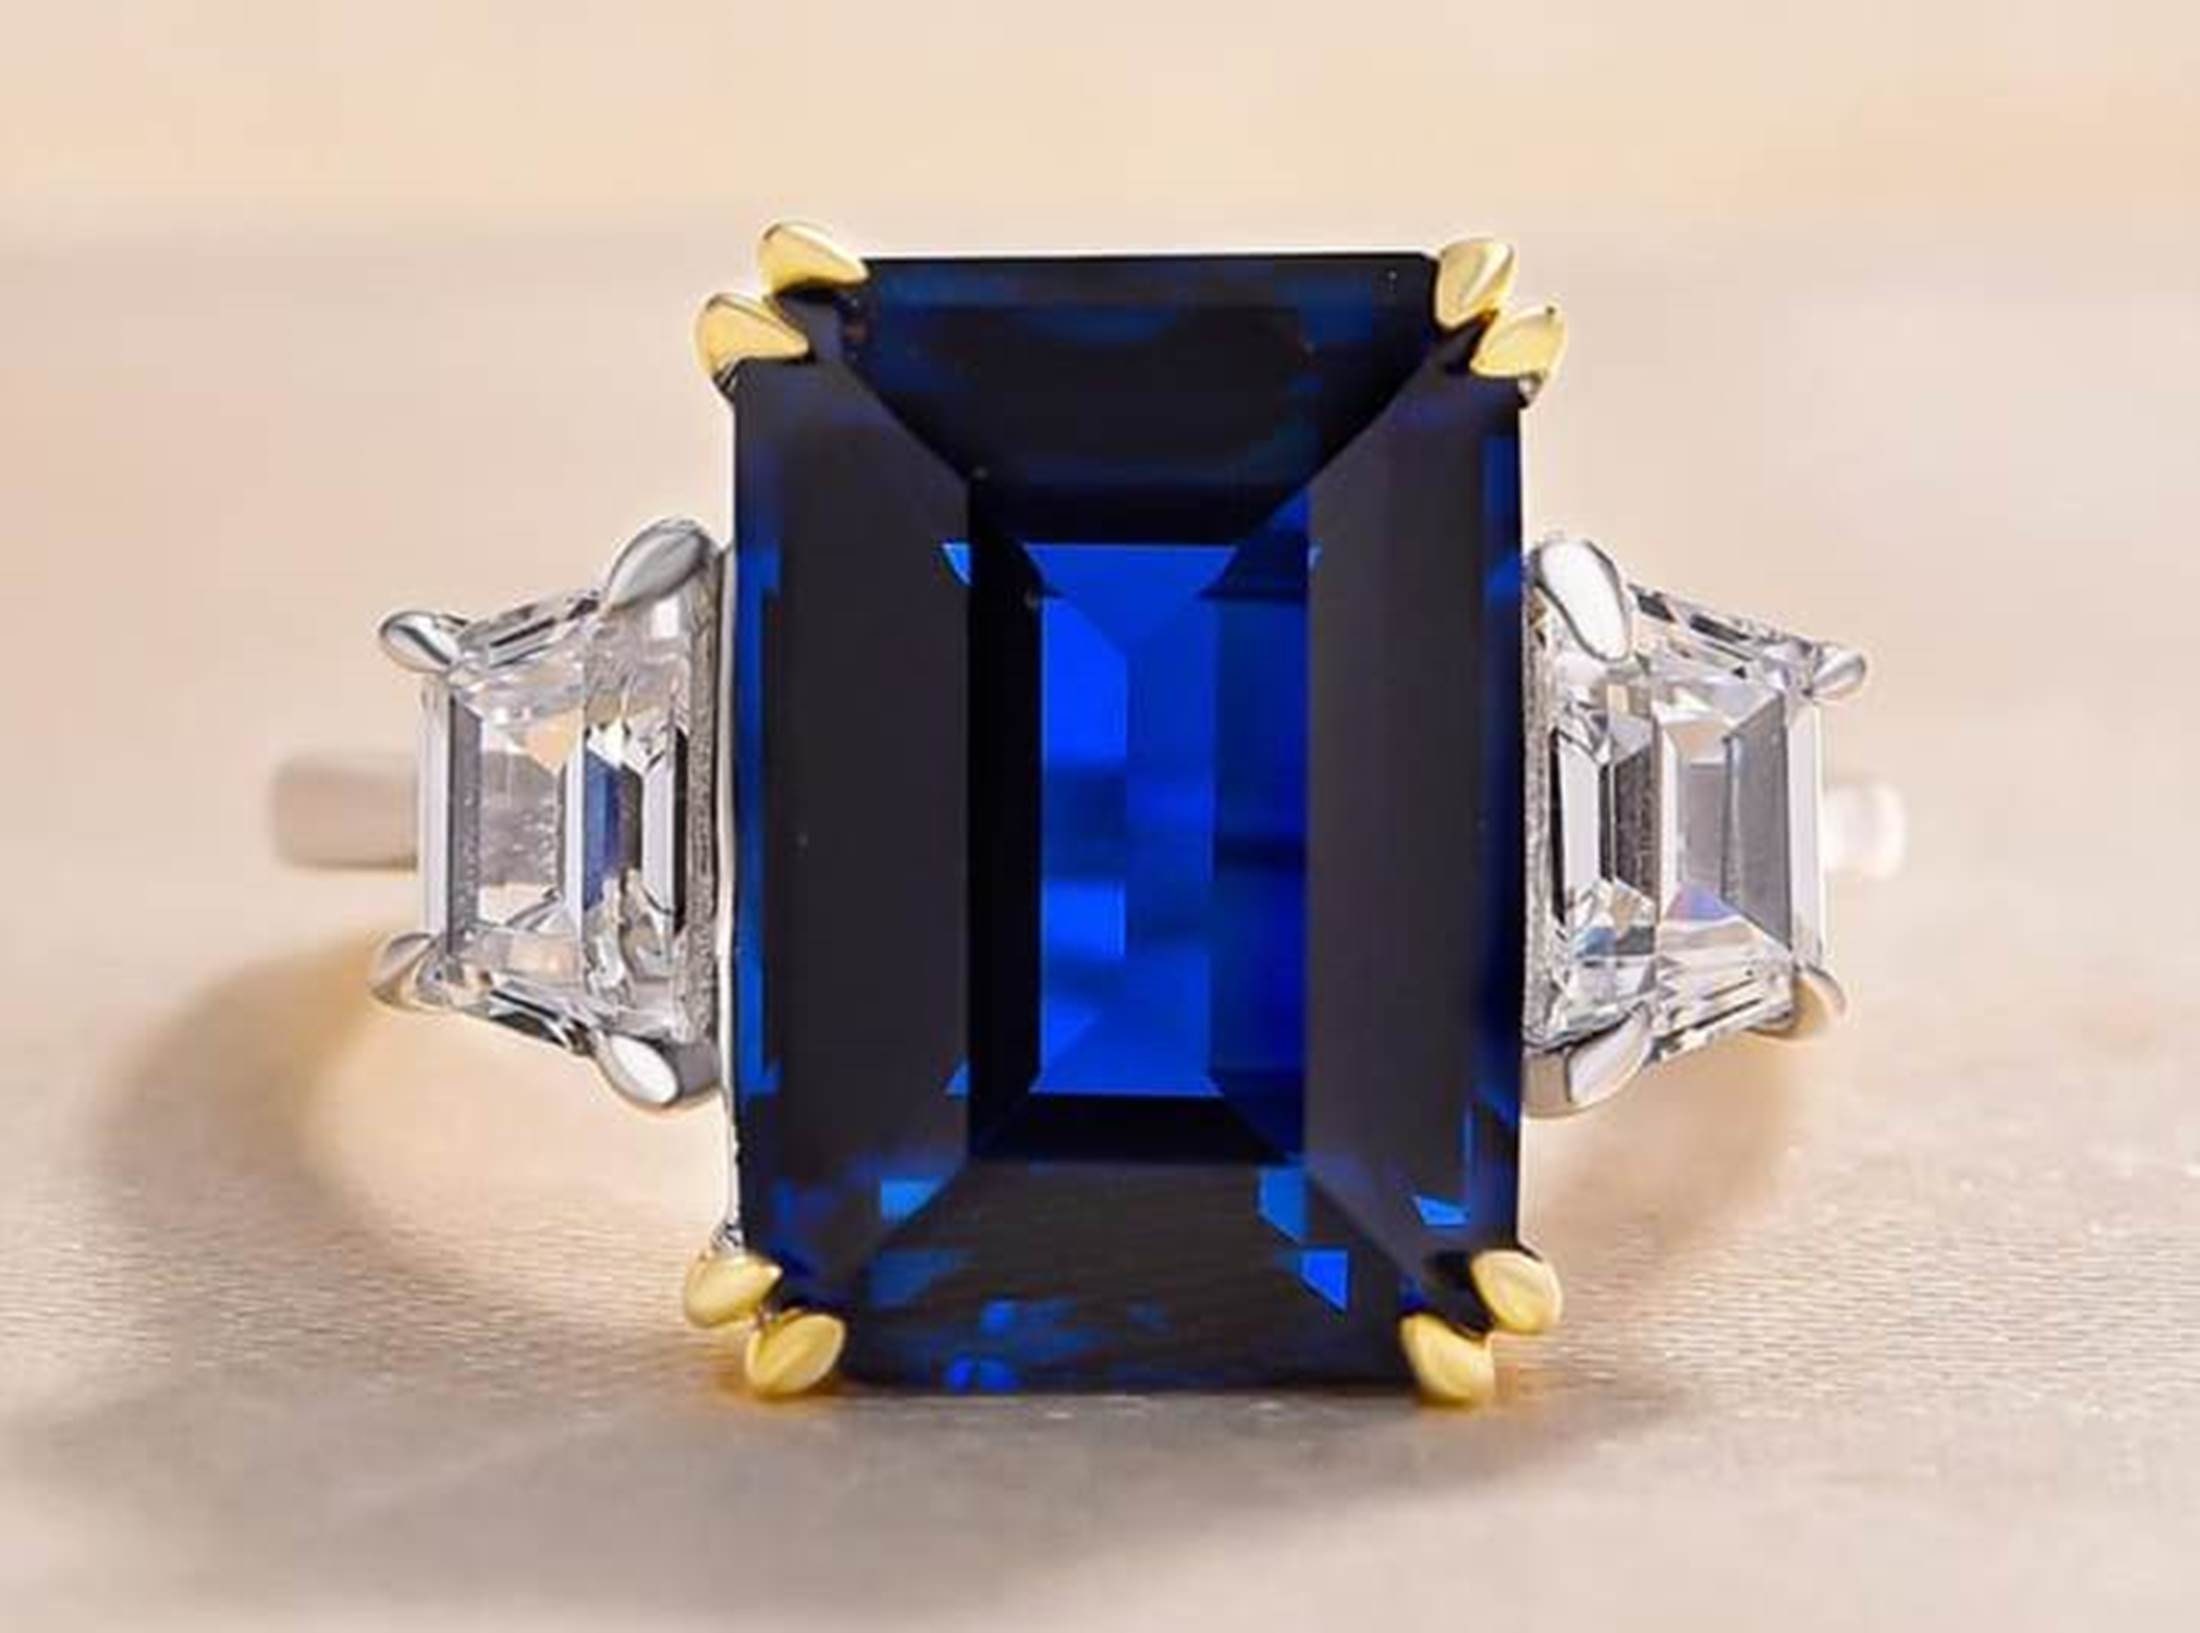 buy panchdhatu ring, blue sapphire price, neelam ek ratti price, neelam  stone price in india, natural stone rings, best quality stone – CLARA